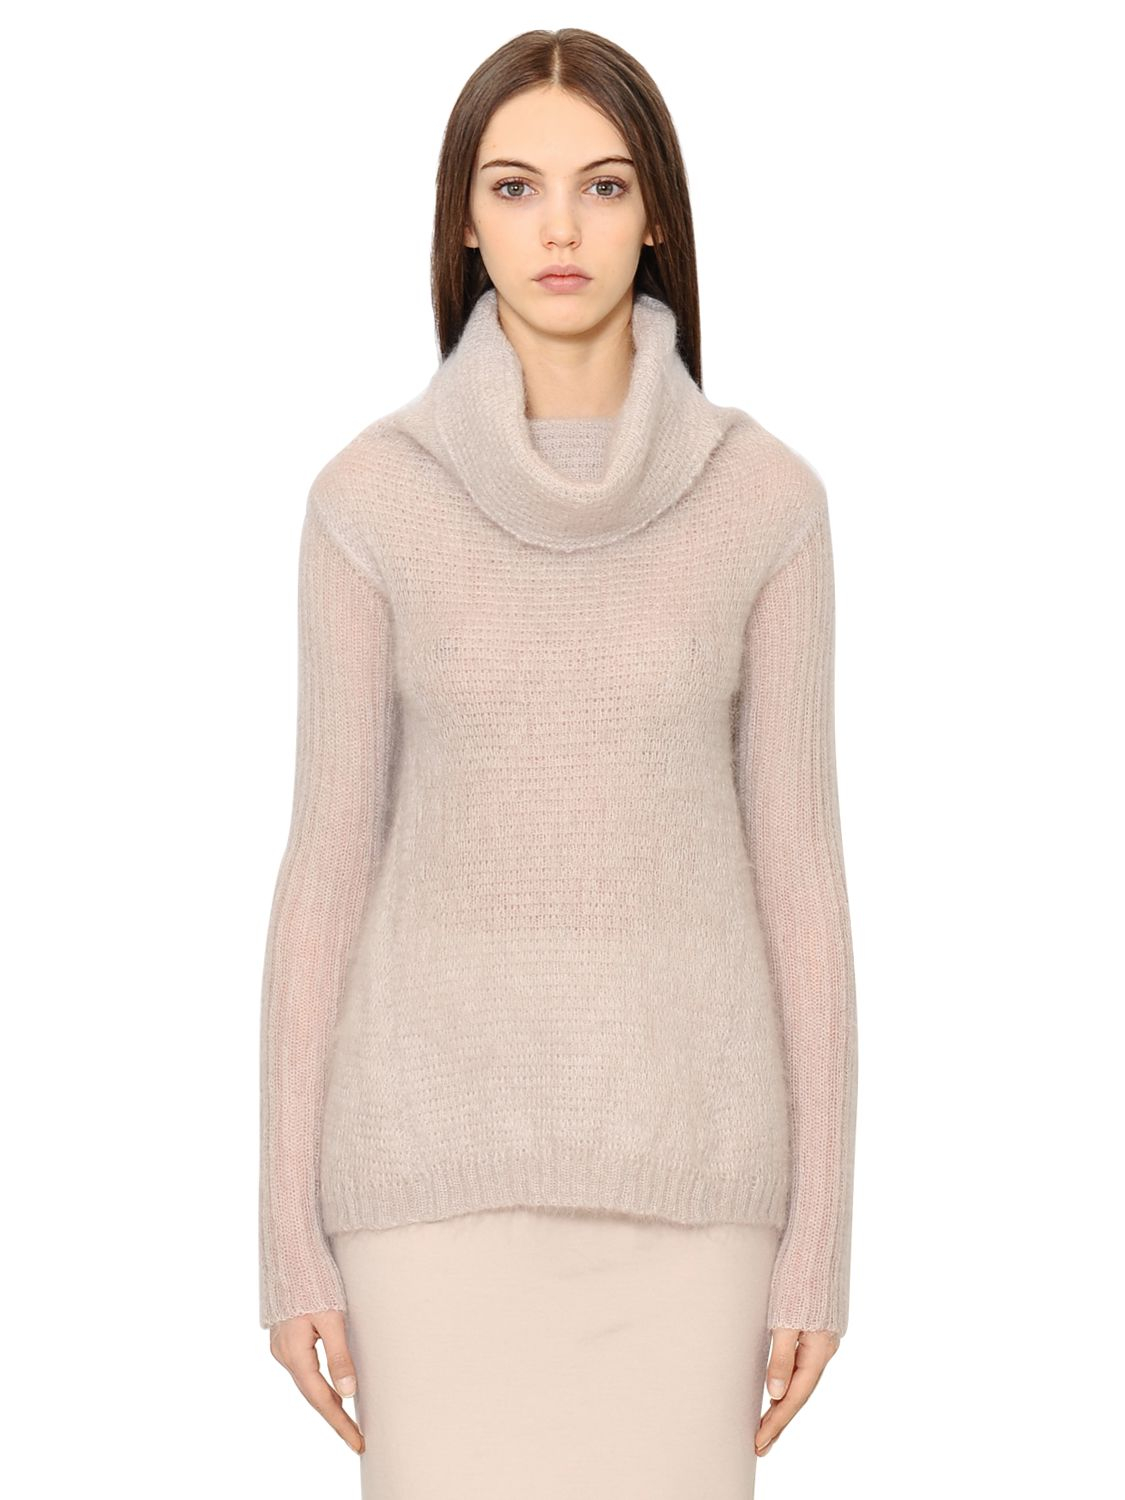 Lyst - Gentry Portofino Mohair Wool & Silk Turtleneck Sweater in White